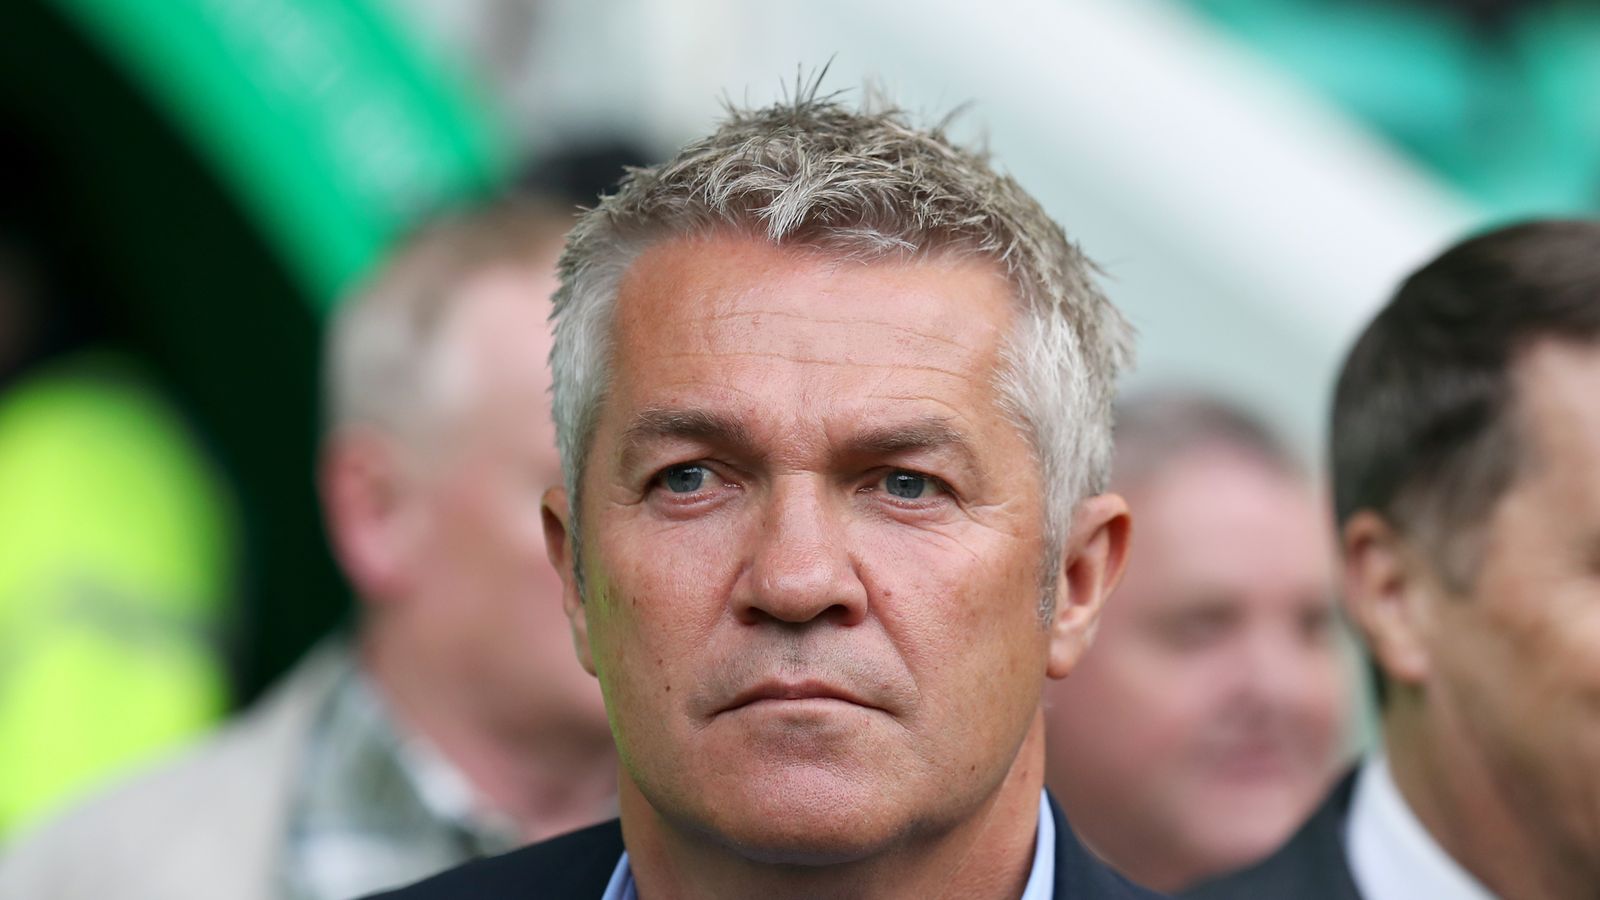 Rosenborg sack head coach before Champions League tie against Celtic | Football News | Sky Sports